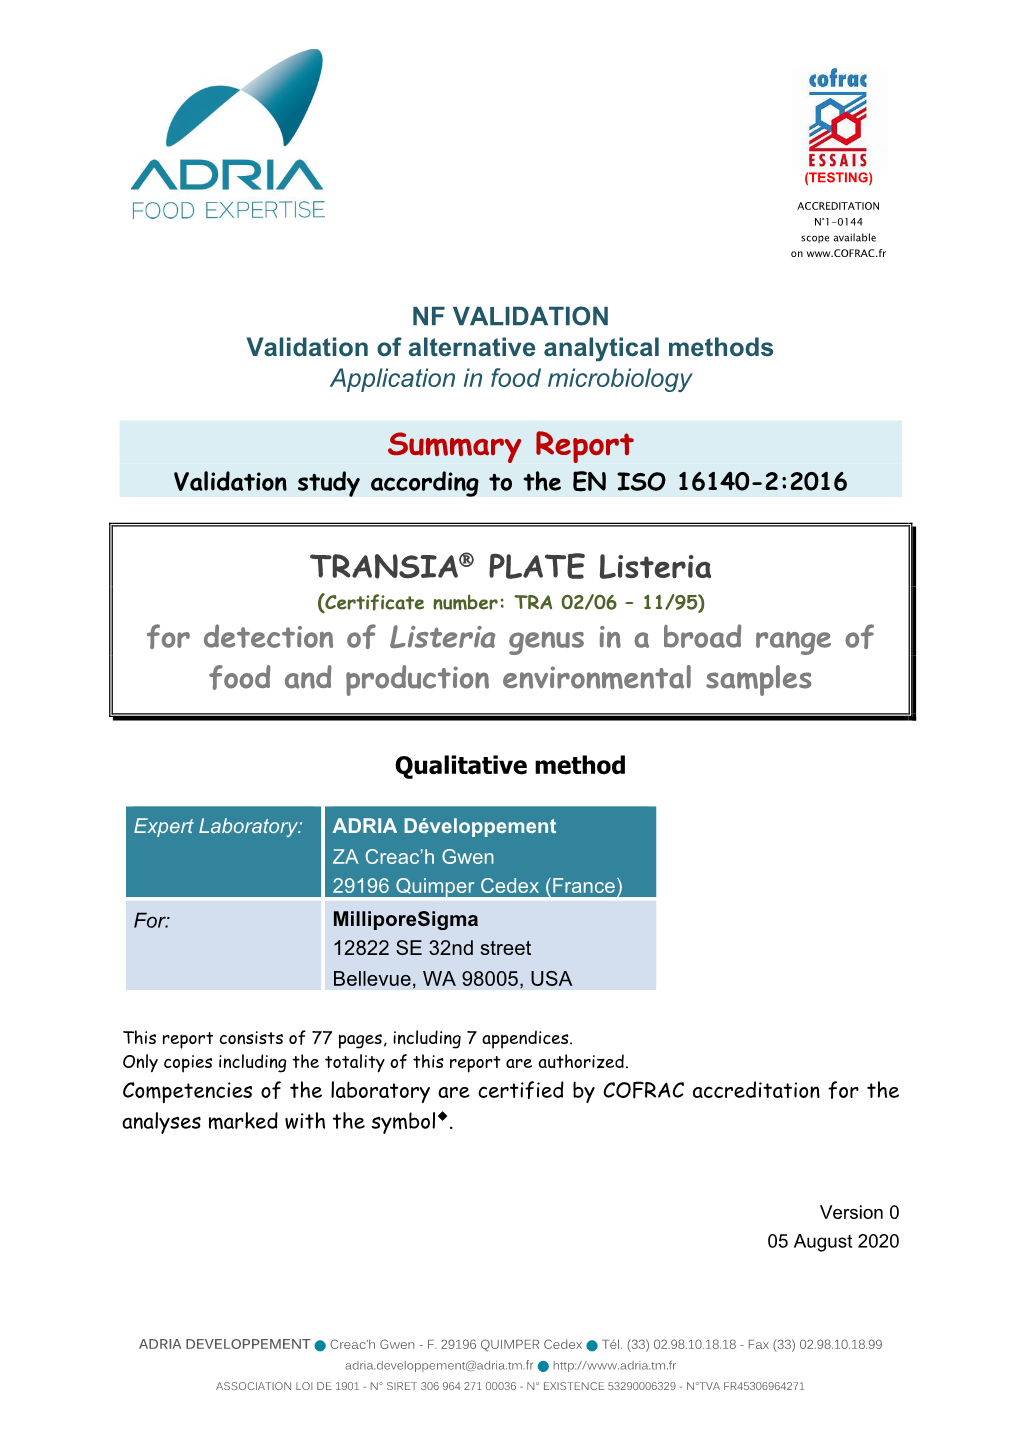 Summary Report TRANSIA® PLATE Listeria